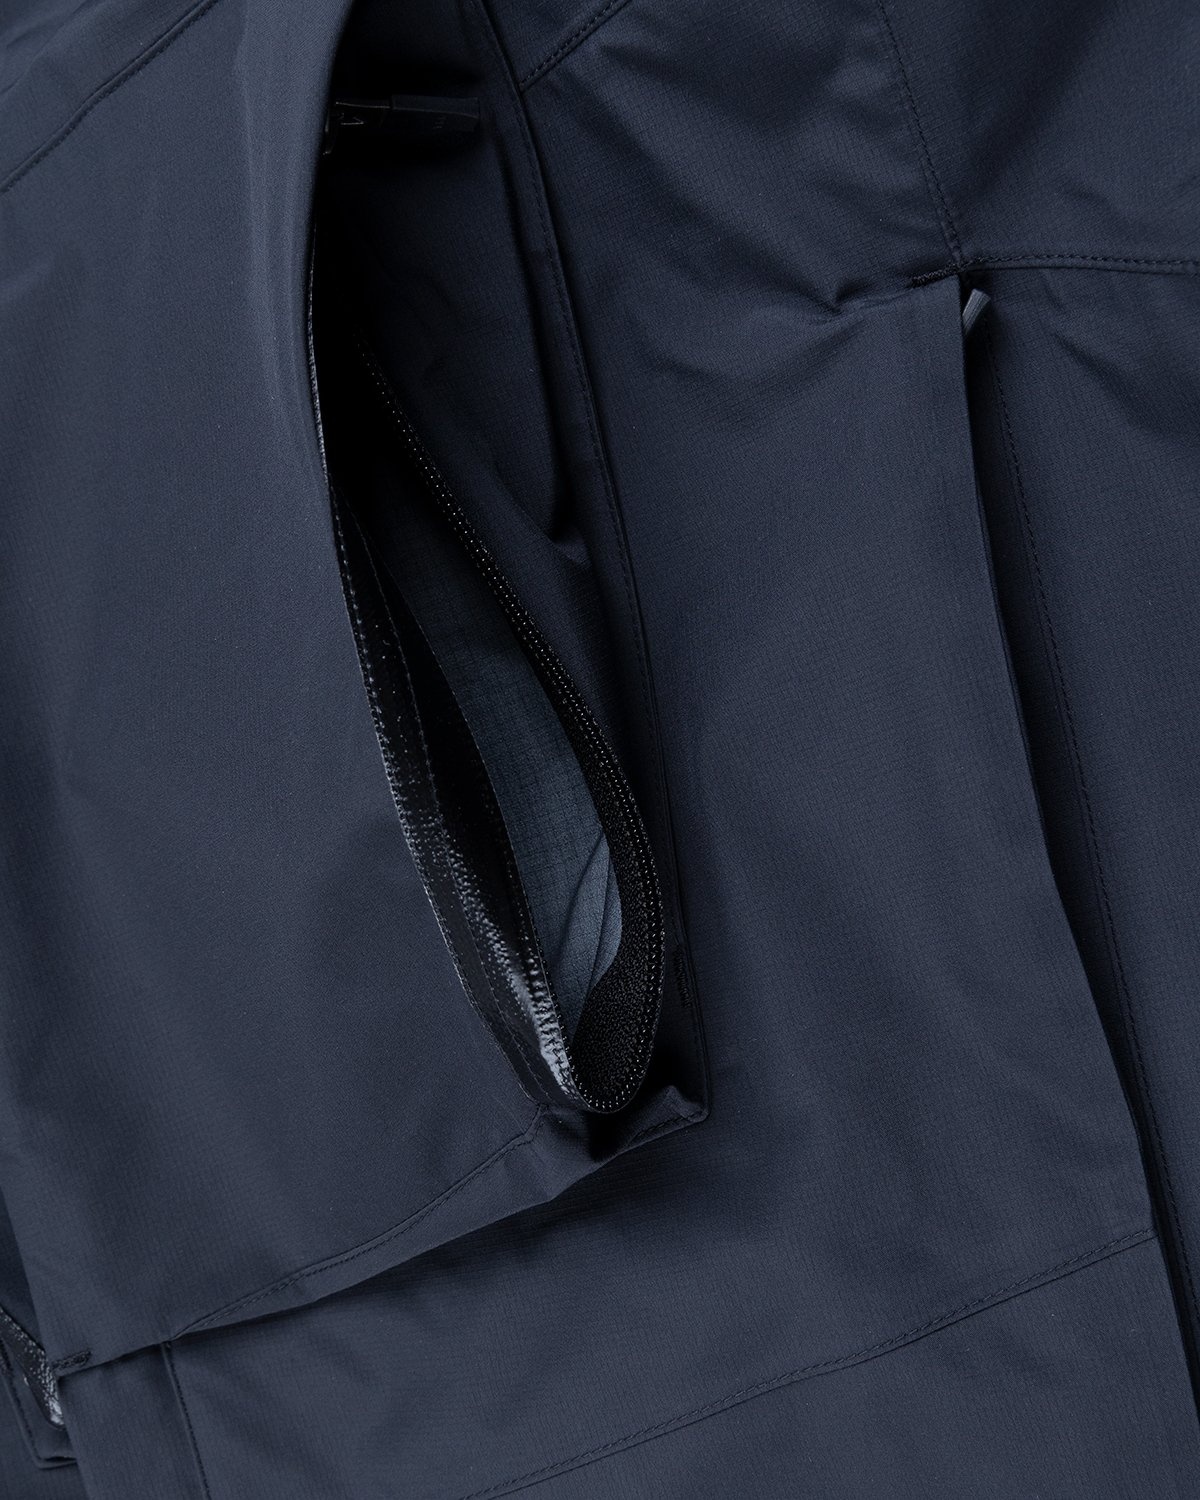 ACRONYM – J96-GT Jacket Black - Outerwear - Black - Image 8